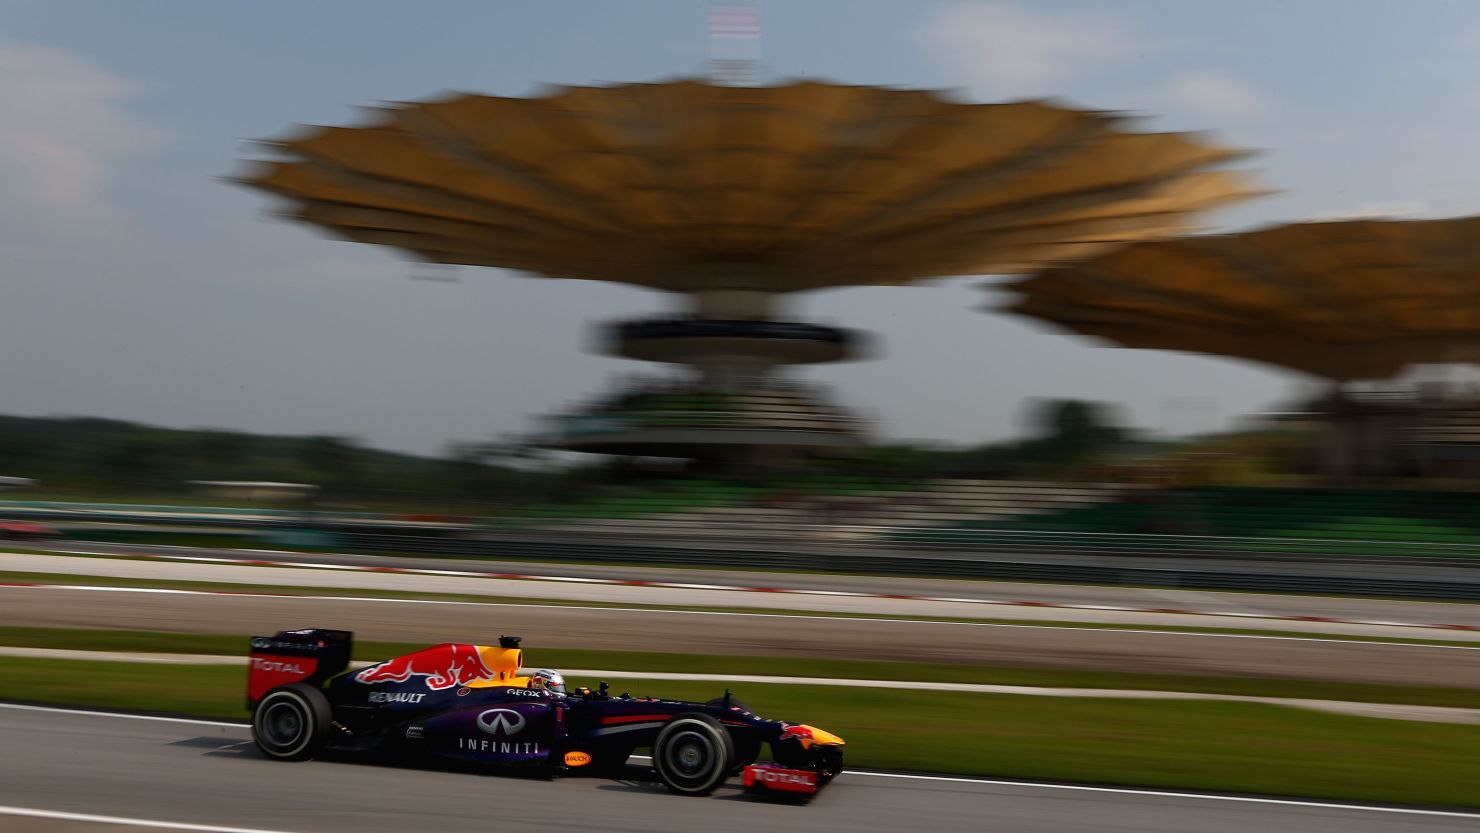 Red Bull's Sebastian Vettel will start on pole position at Sunday's Malaysian Grand Prix.